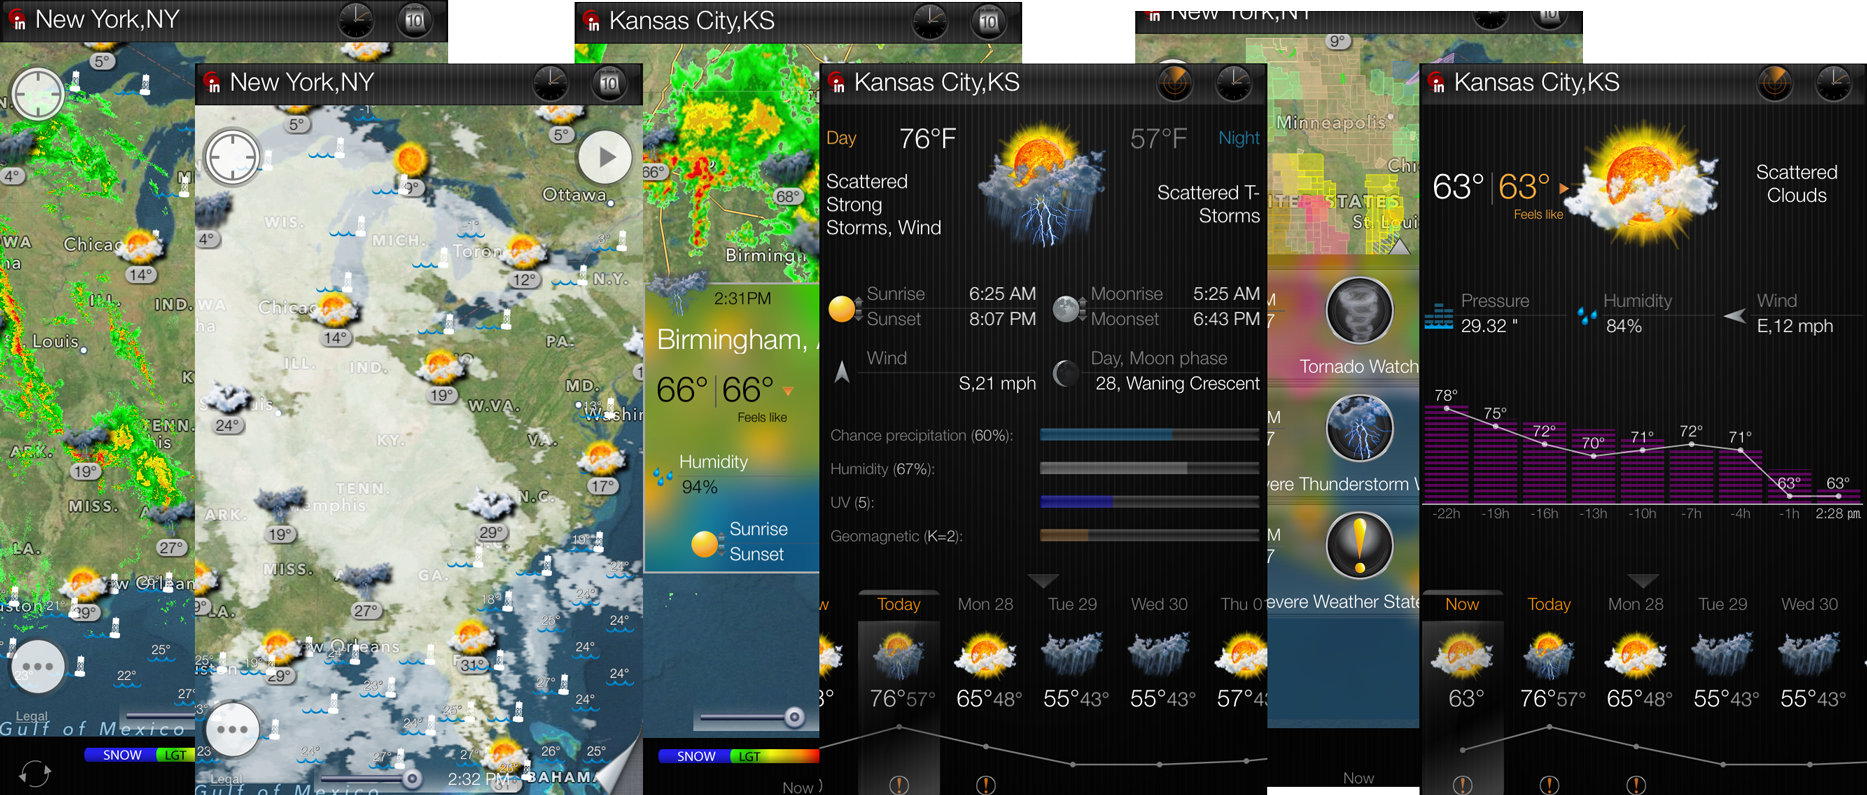 radar-weather-alerts-hurricane-tornado-buoys-forecast-app-iphone-ipad-eweather-hd.png